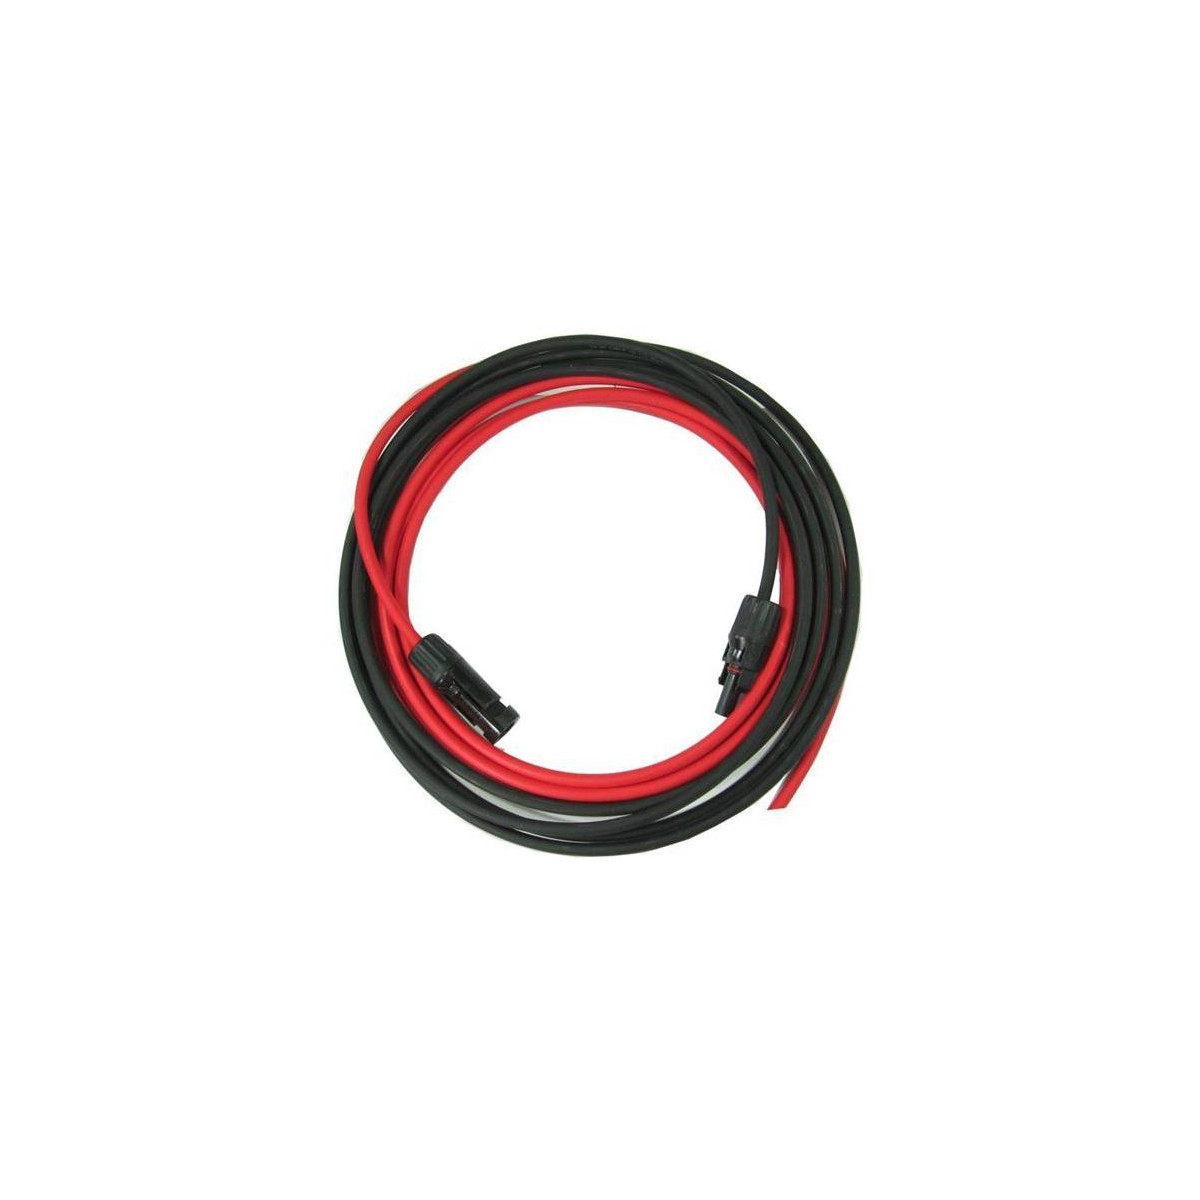 Viac oSolární kabel 6mm2, červený+černý s konektory MC4, 20m